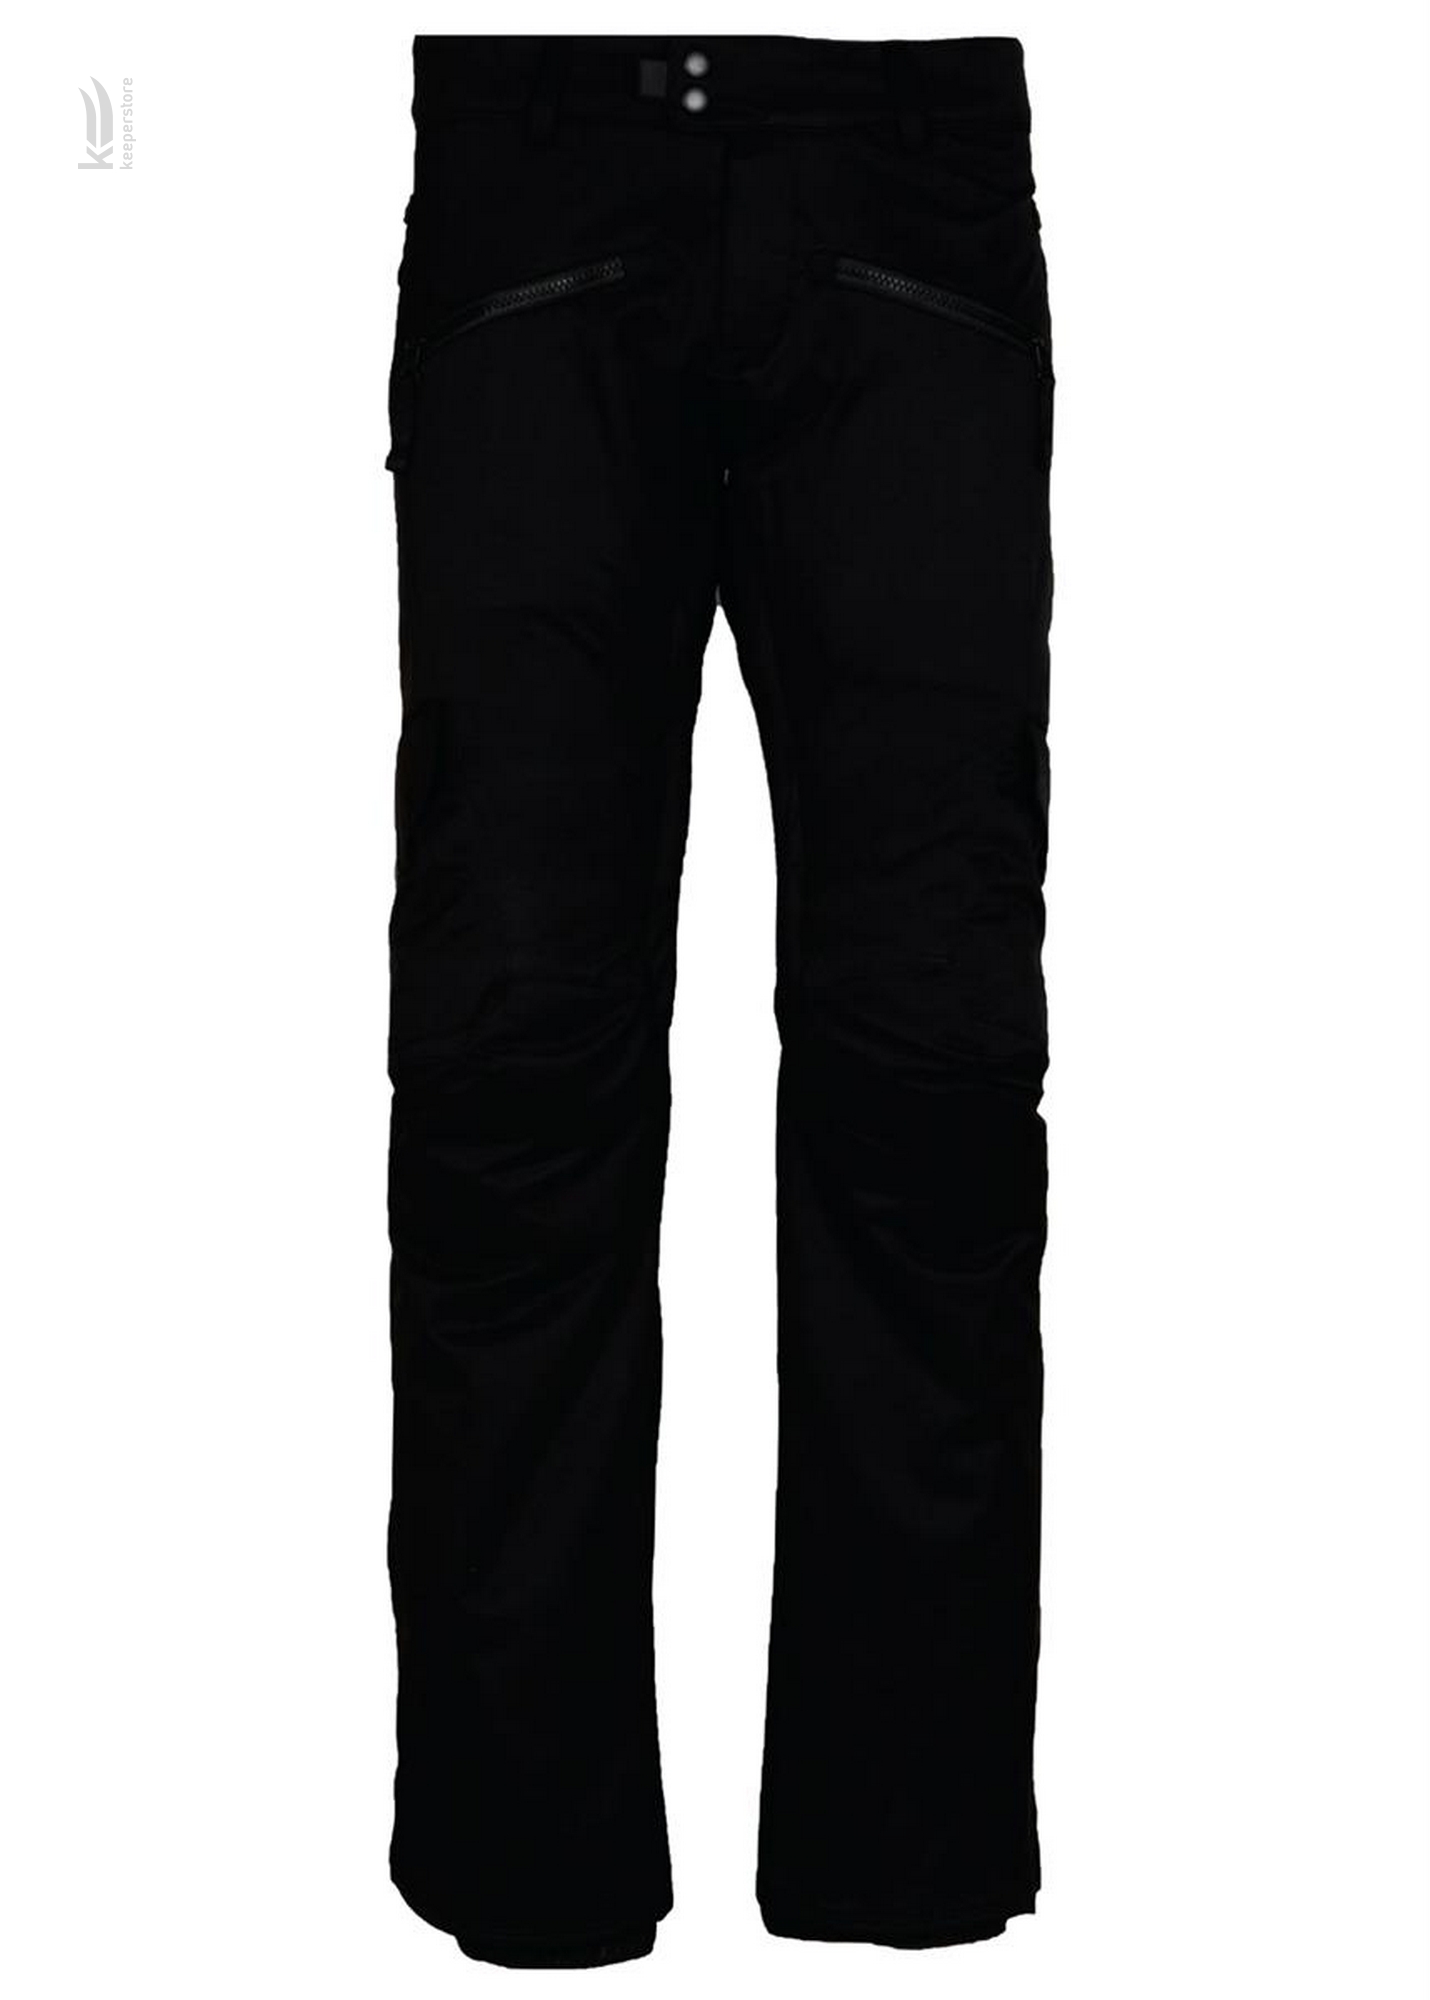 Сноубордические штаны 686 Authentic Mistress Insulated Pant Black Jade (S)